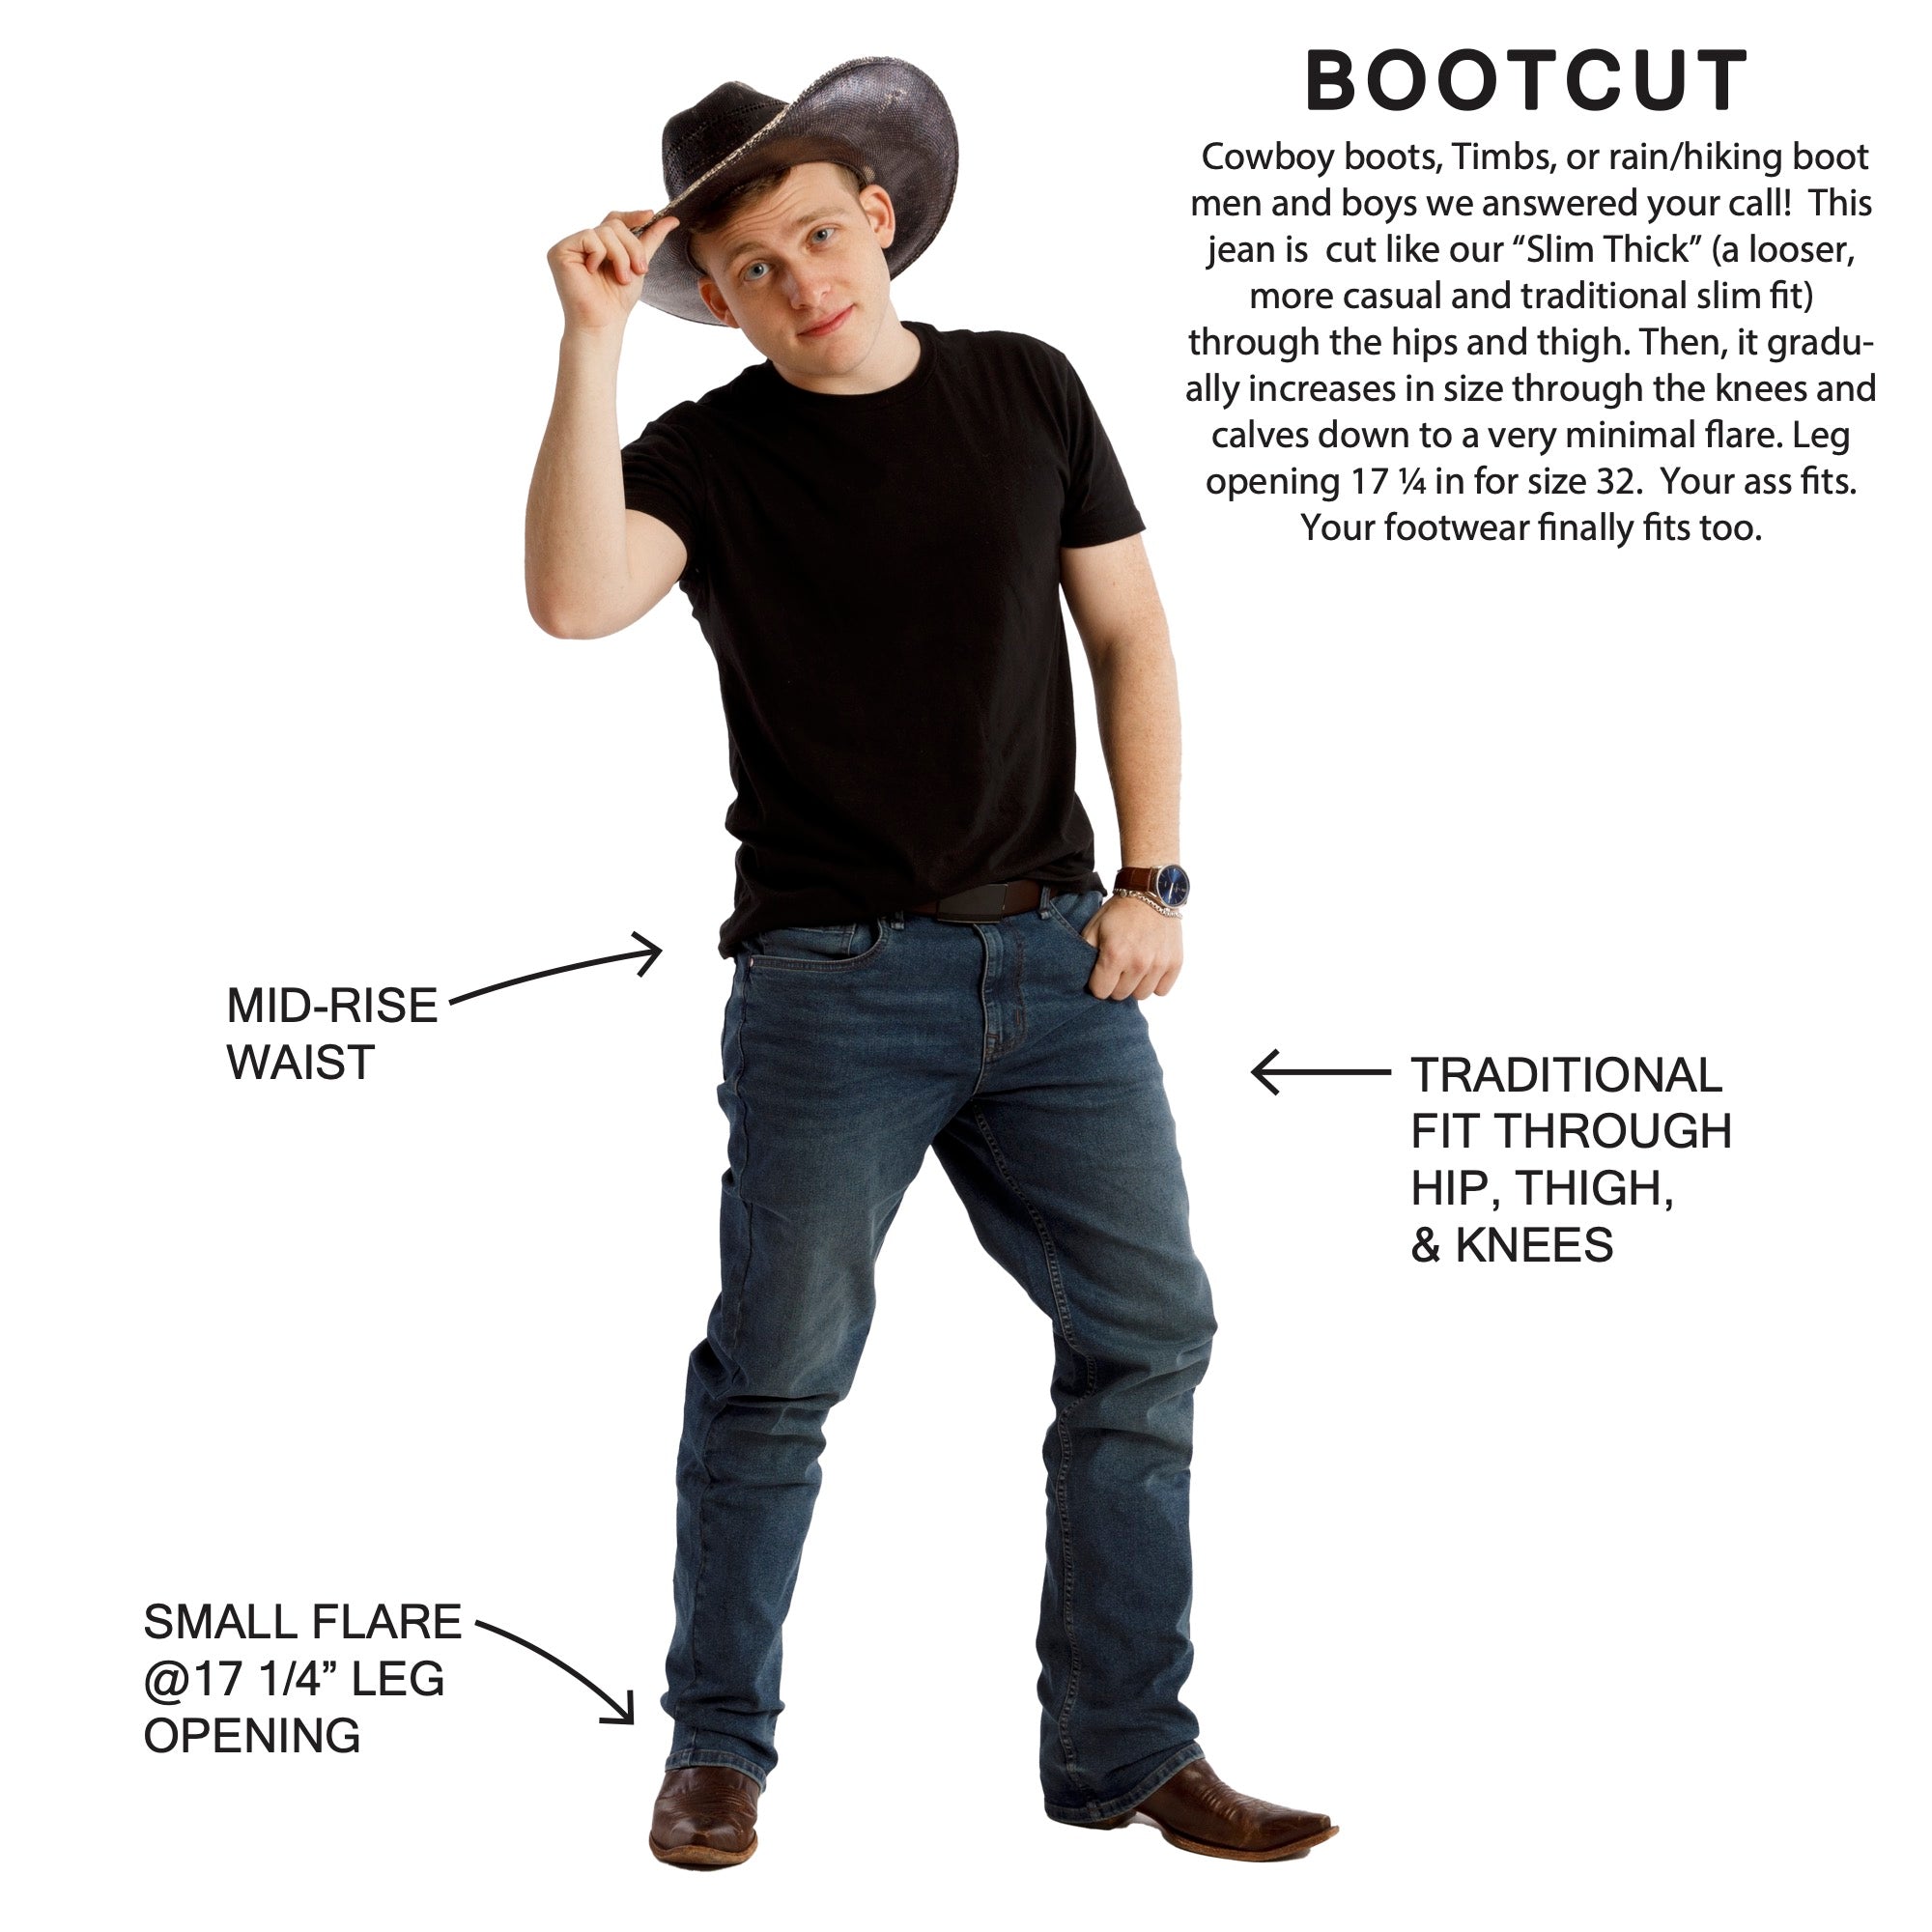 Men's Jeans, Slim Fit, Bootcut Jeans & More